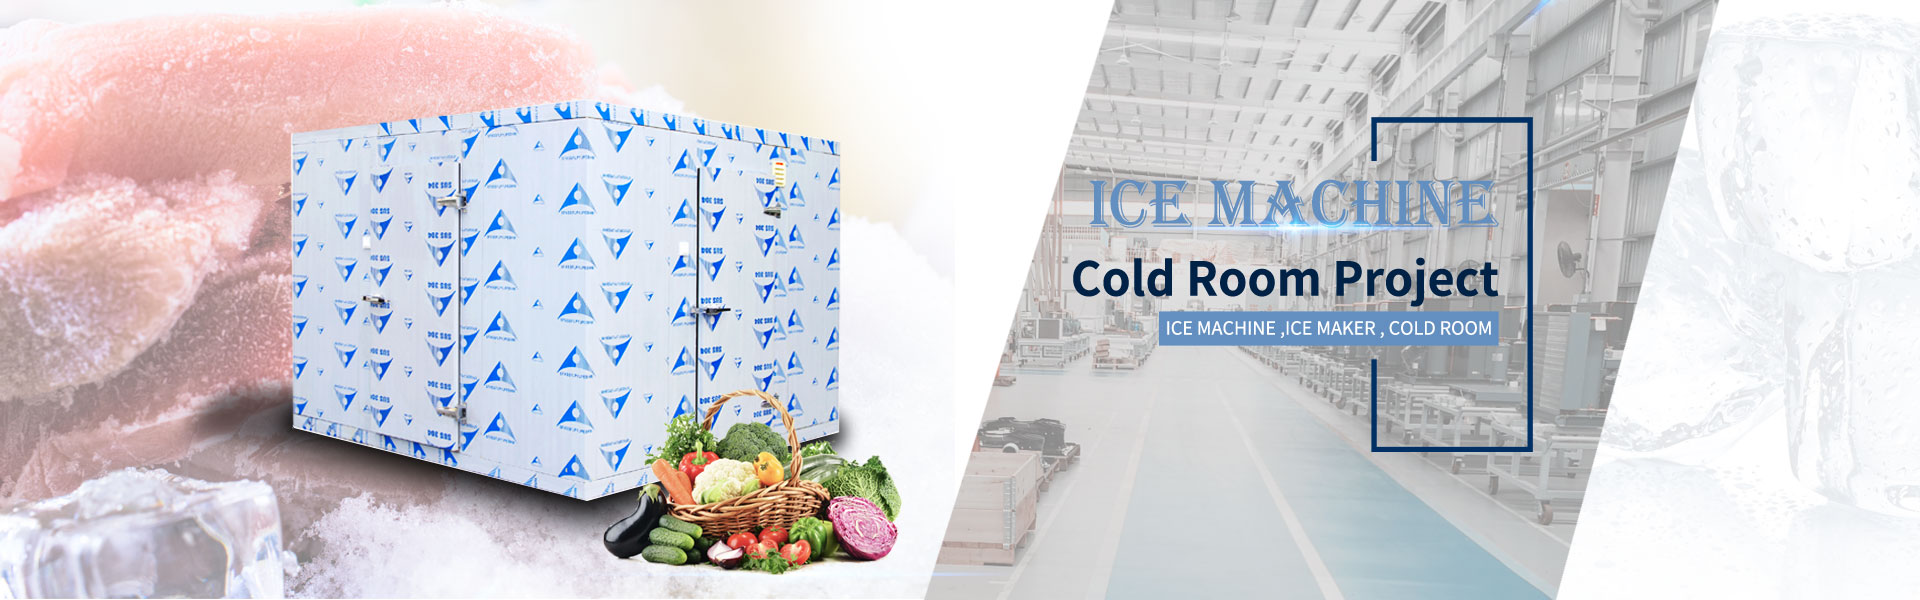 machine à glaçons, machine à glaçons, chambre froide,Guangzhou Hefforts Refrigeration Equipment Co.,Ltd.